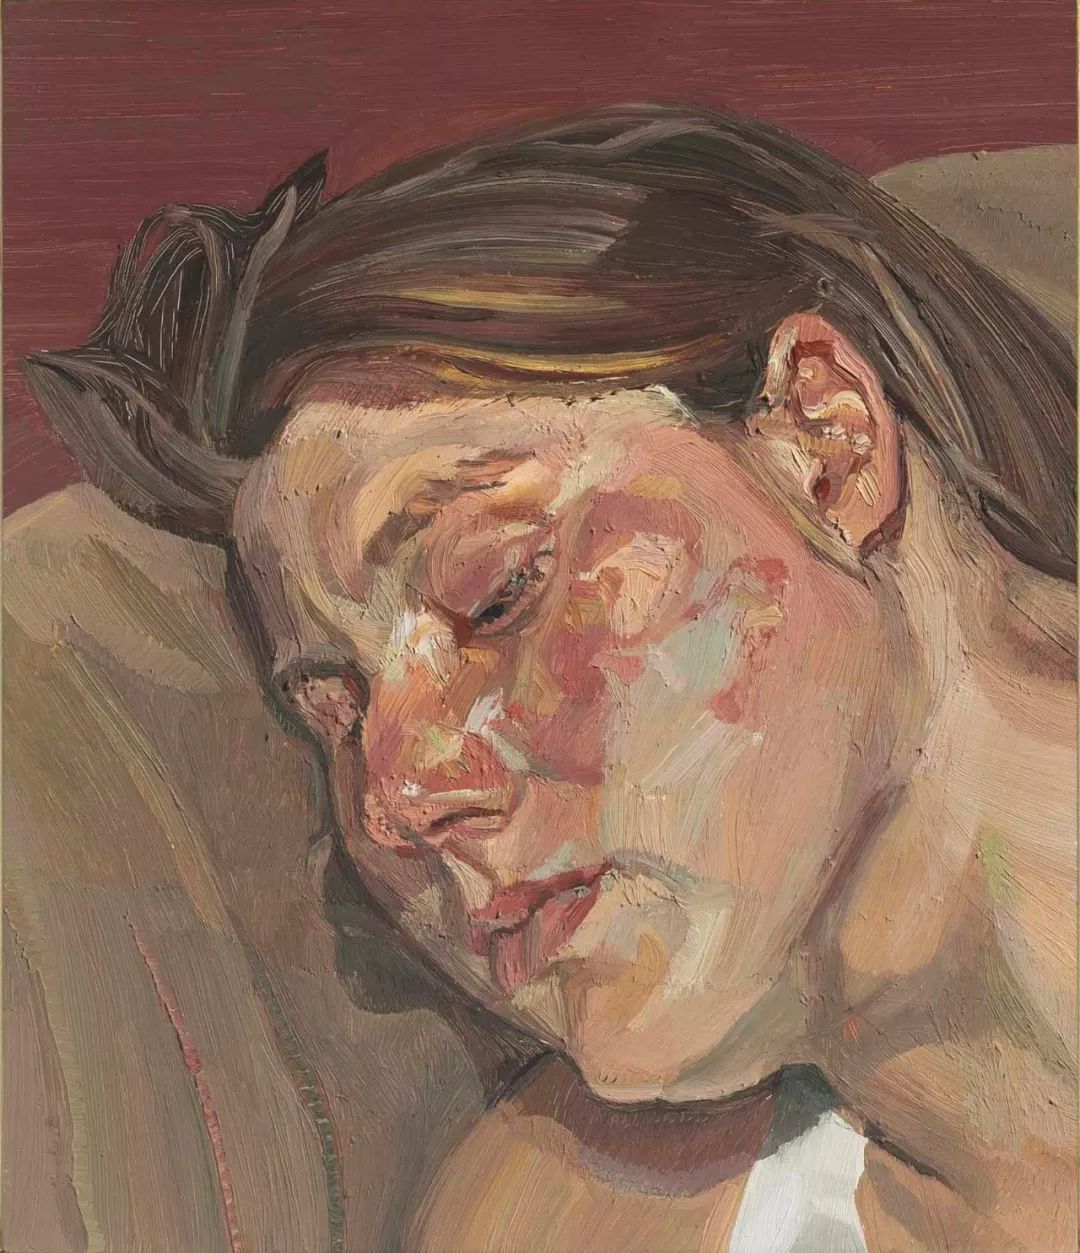 卢西安·弗洛伊德《girl in striped nightshirt》,布面油画,29